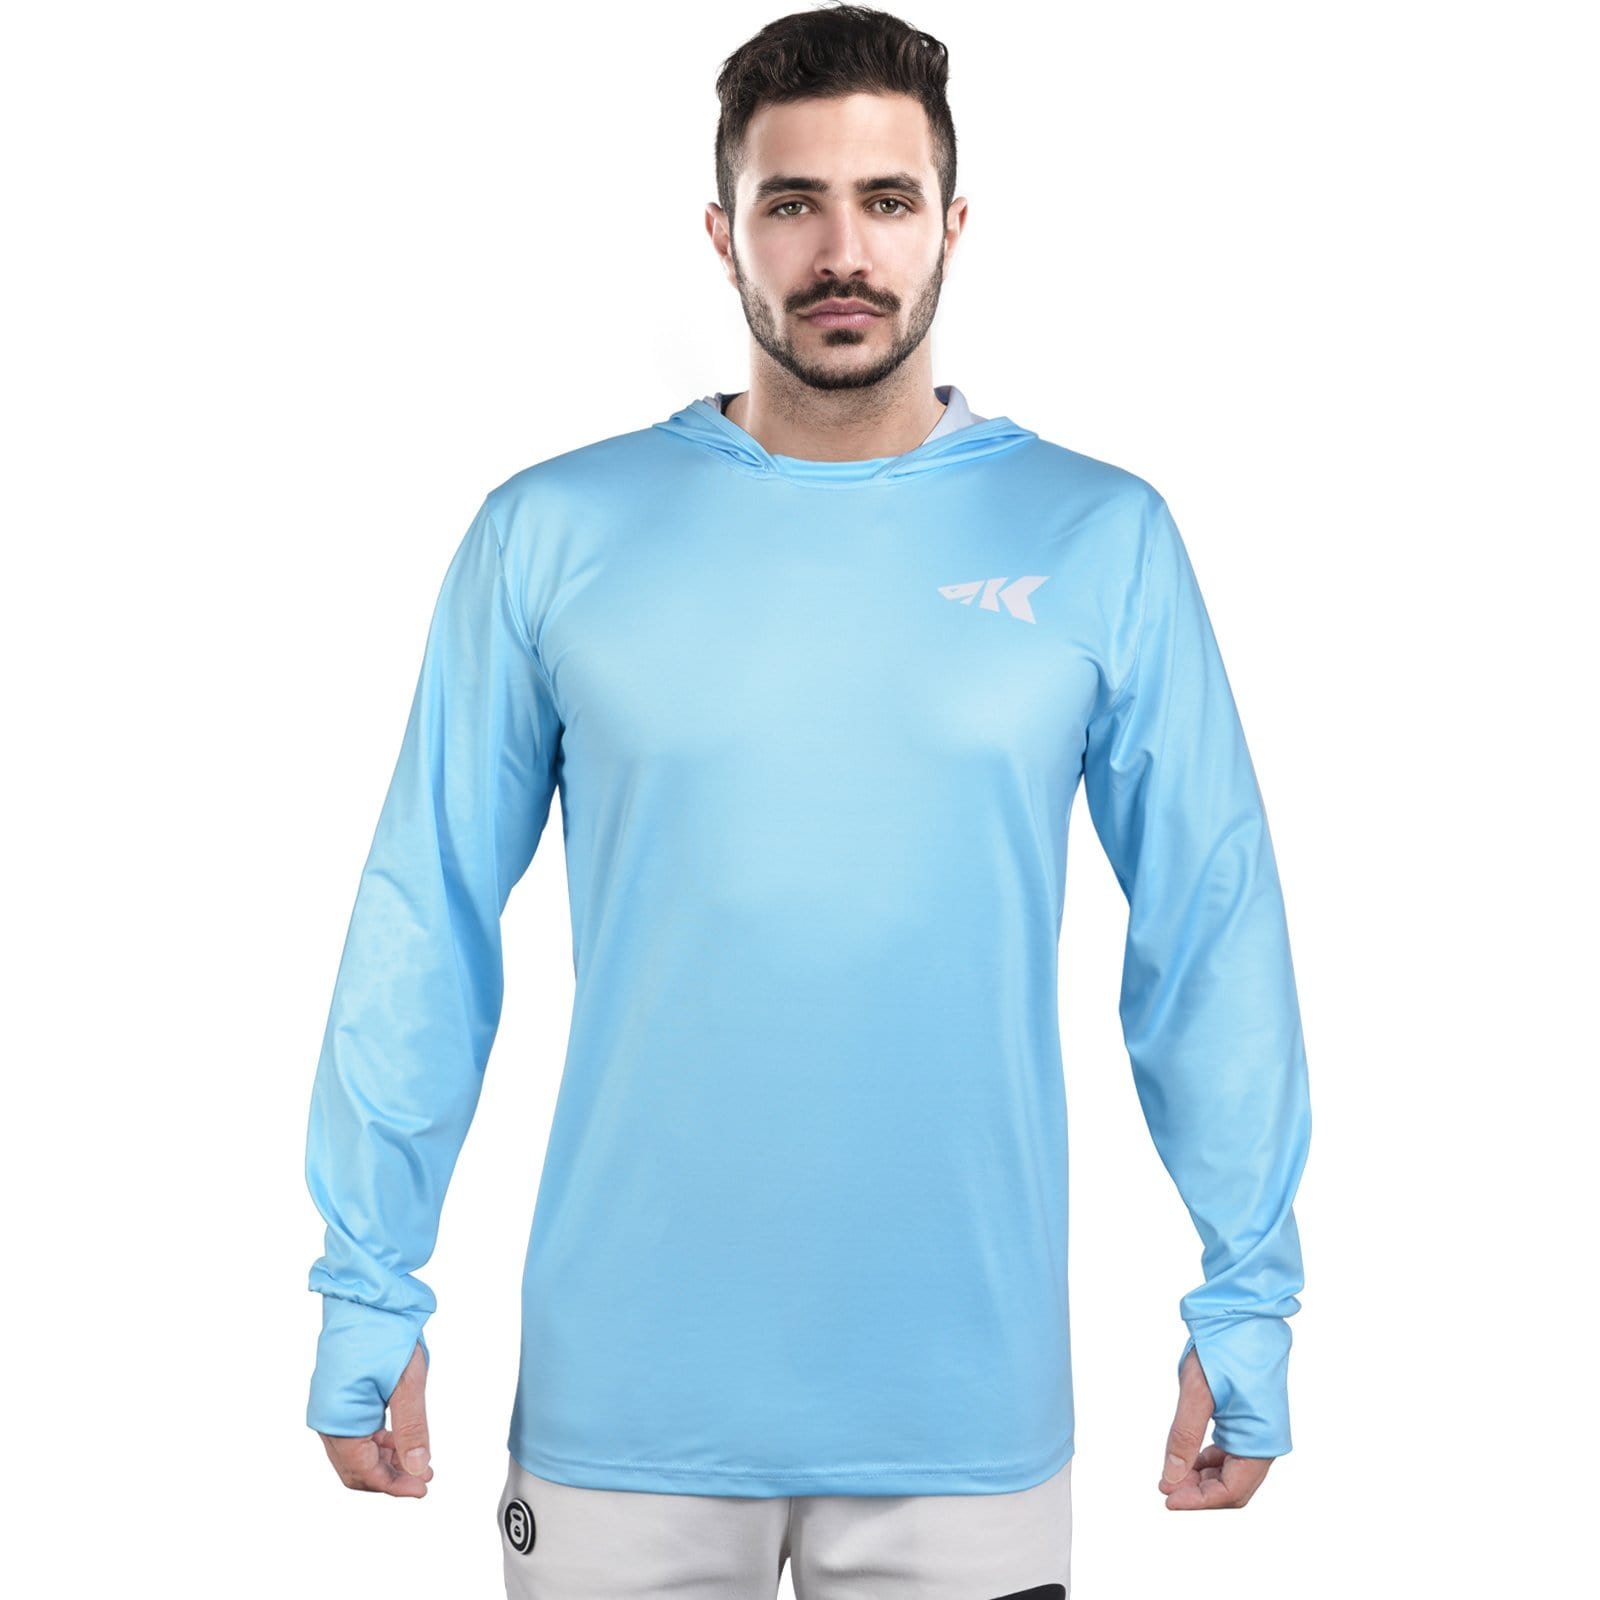 Mens Long Sleeve Fishing Shirt With UV Protection, Moisture